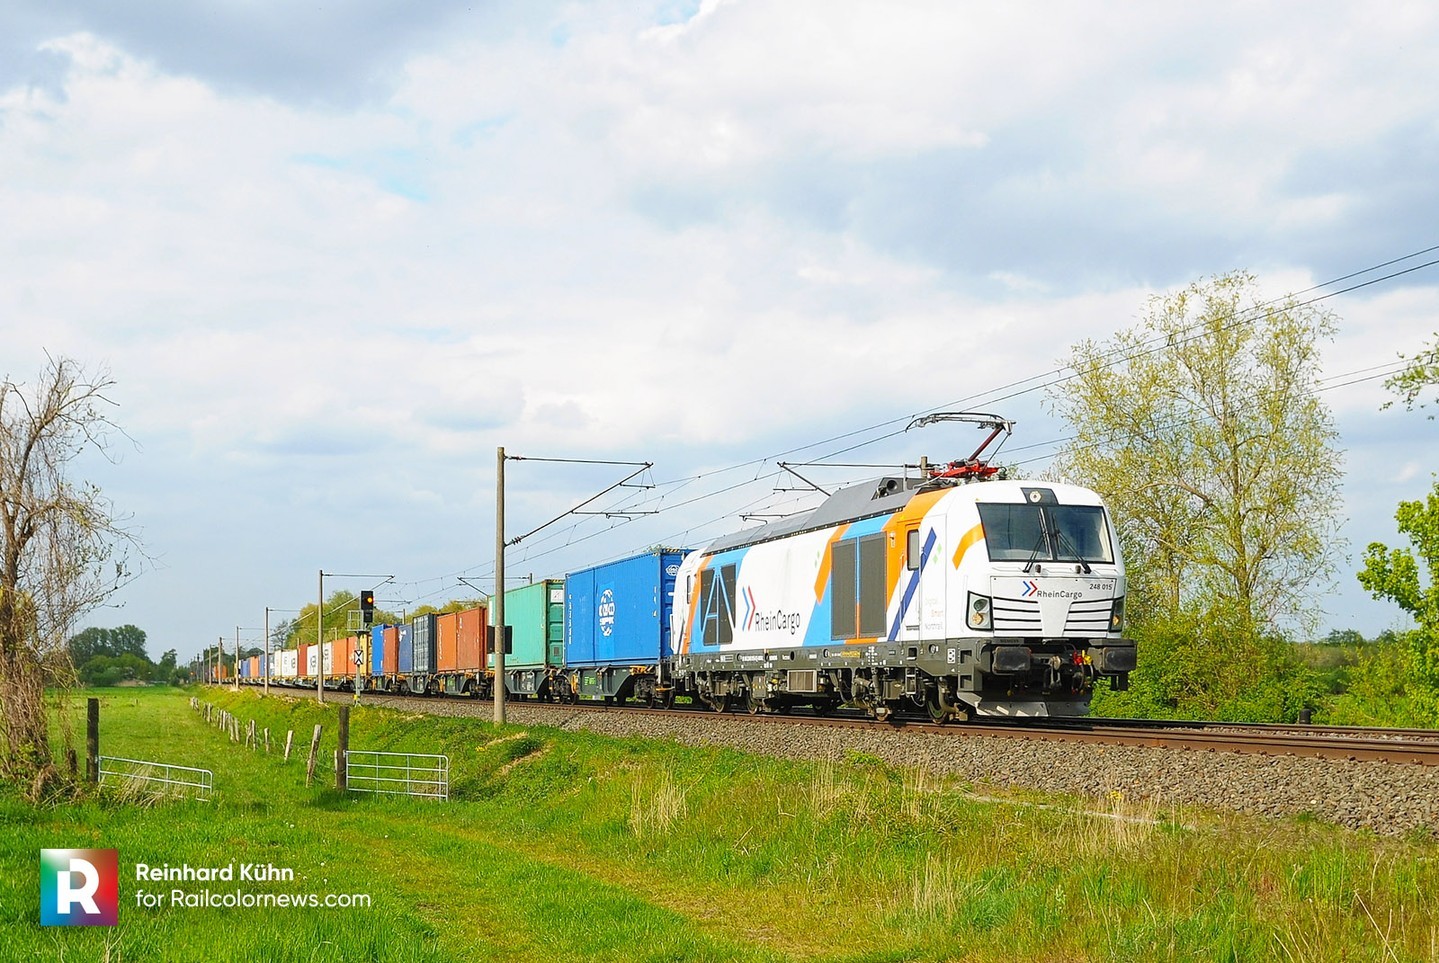 📷 by Reinhard Kühn 🇩🇪 Northrail Vectron Dual Mode with Rheincargo stickers ⬆️ 
.
.
.
.
#siemens #vectron #siemensvectrondualmode #siemens_mobility #vectrondualmode #dualmode #new #electriclocomotive #railways #railways_of_europe #railcolornews #ellok #train #locomotive #ellok #br248015 #bahnreihe248 #248015 #Paribus #Northrail #duallocomotive #eisenbahn #zug #paribusnorthrail #nrail